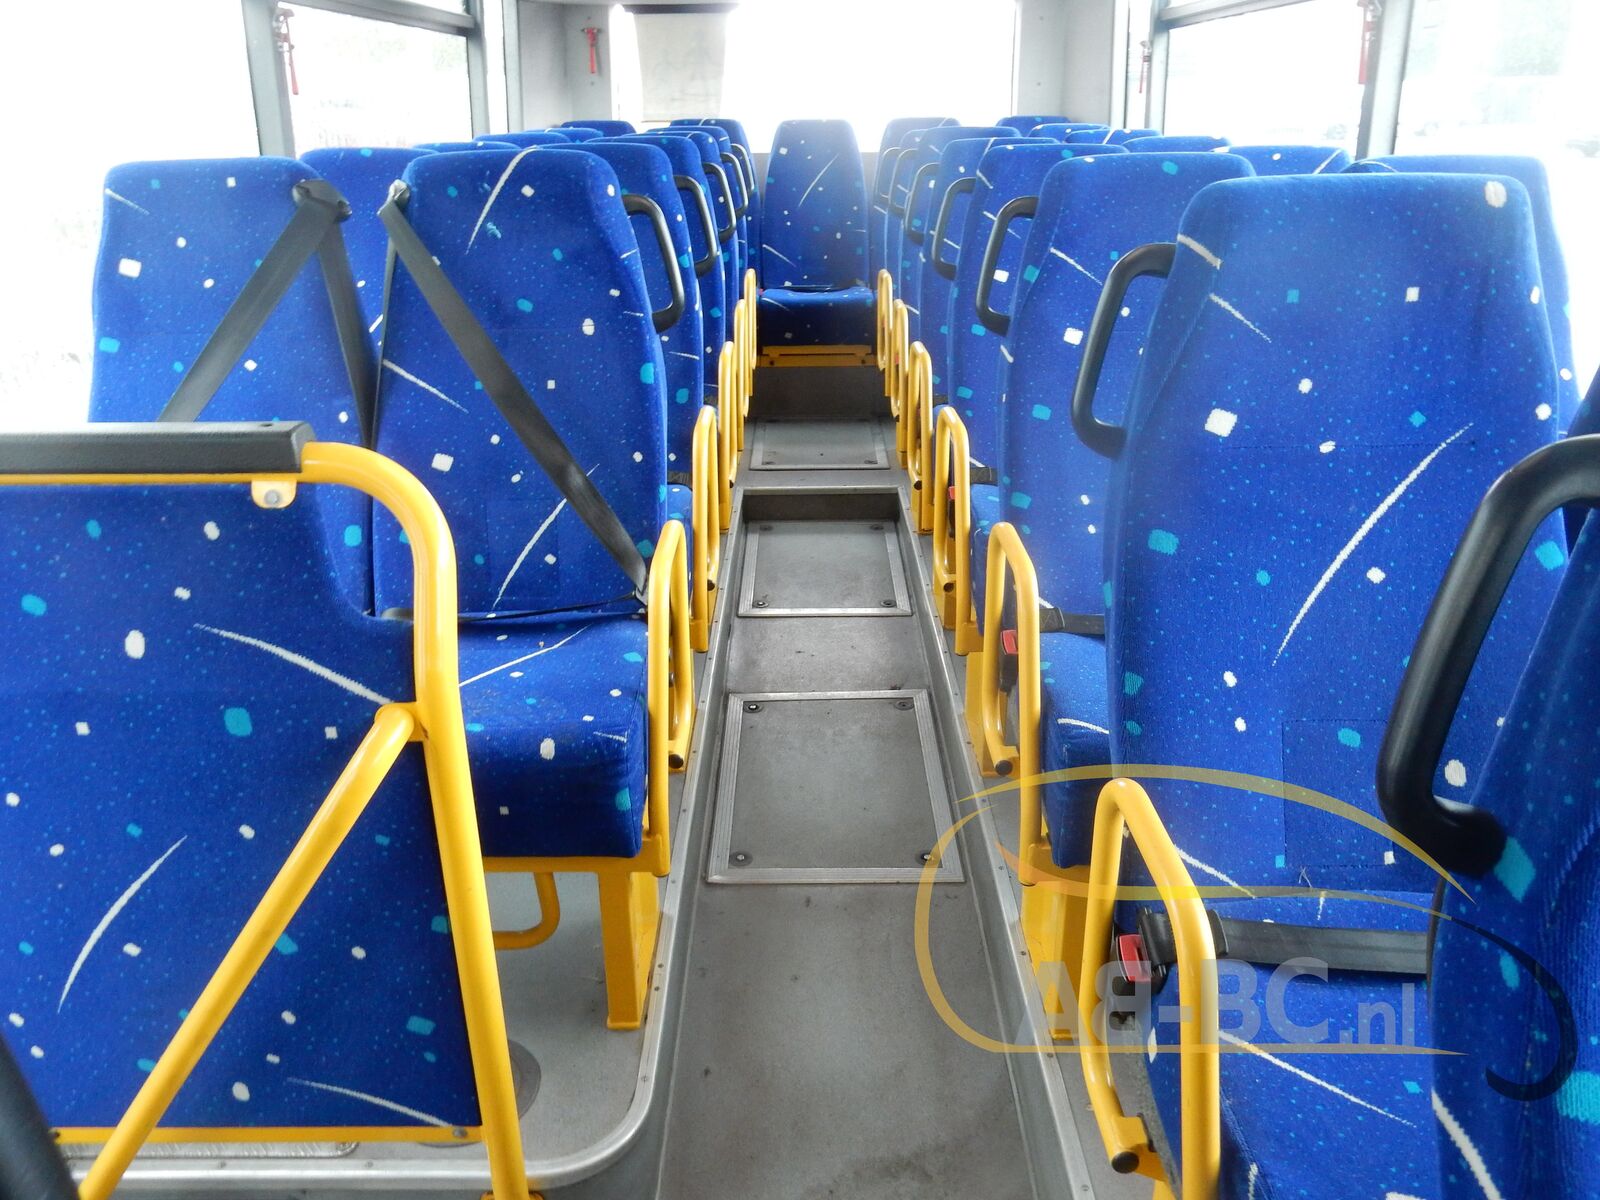 interurban-bus-IVECO-Irisbus-Recreo-64-Seats---1634818681423996993_orig_67a27b178ad0a36c89e4617c004ad09c--21102115152205689900